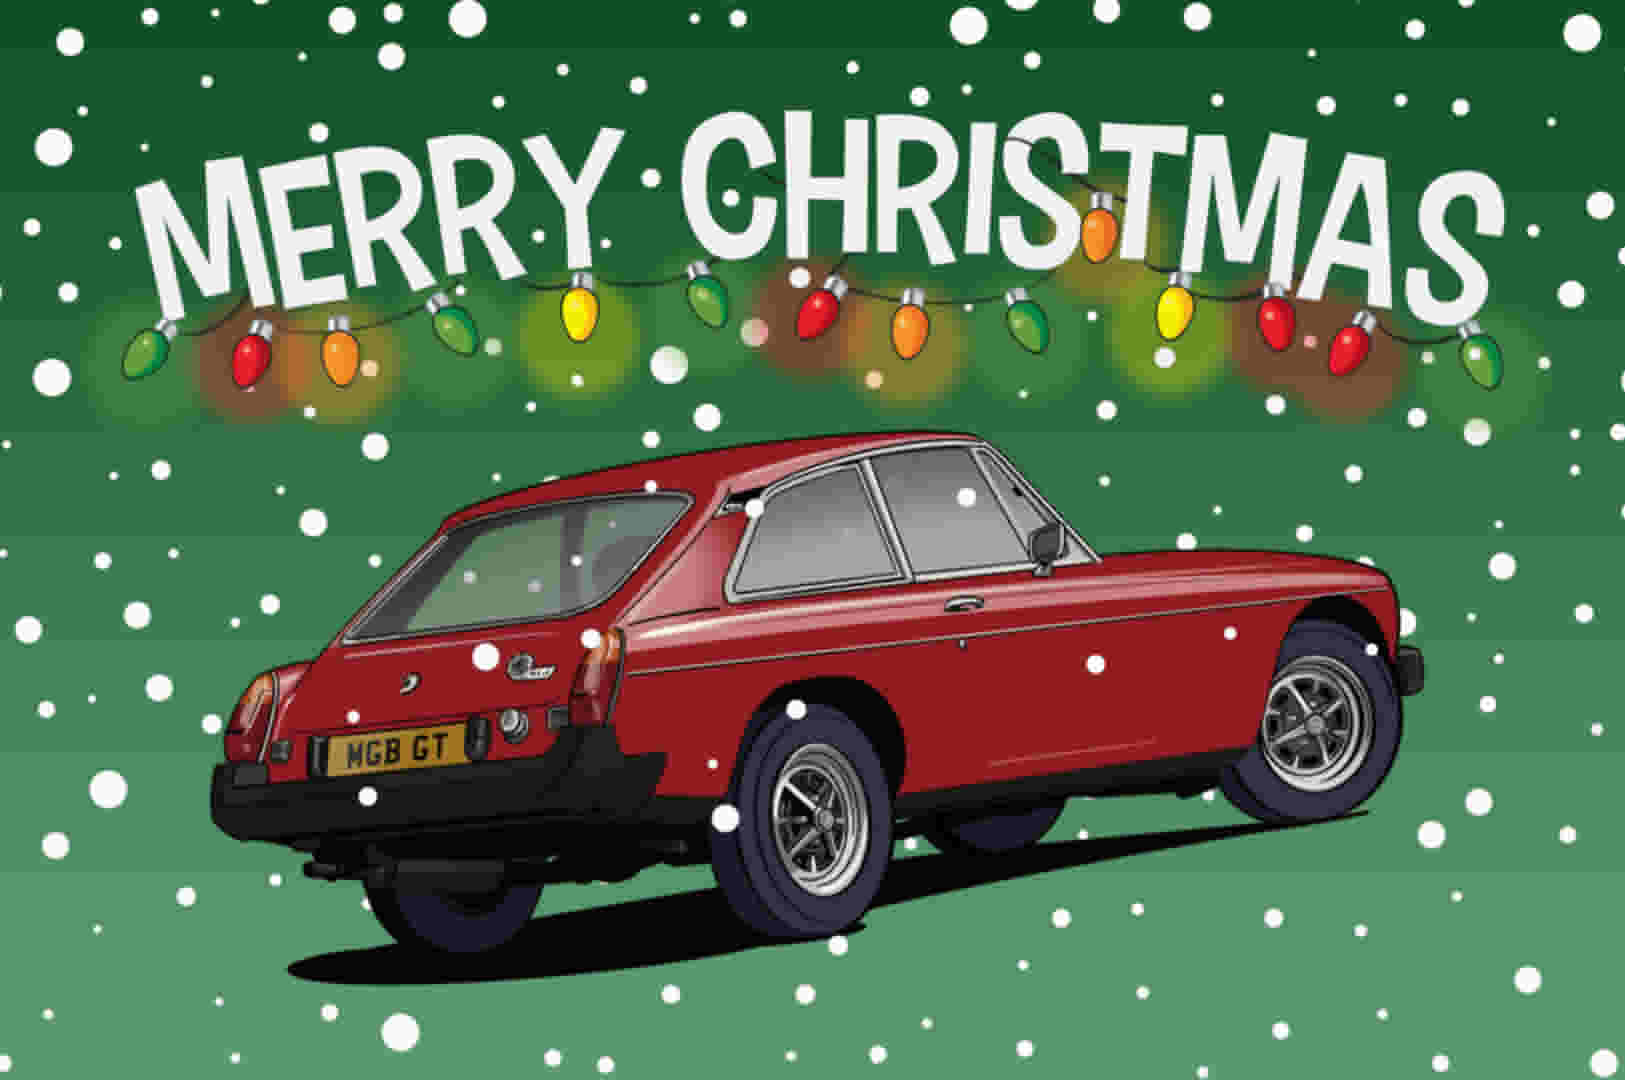 Burgundy MGB car Christmas Card